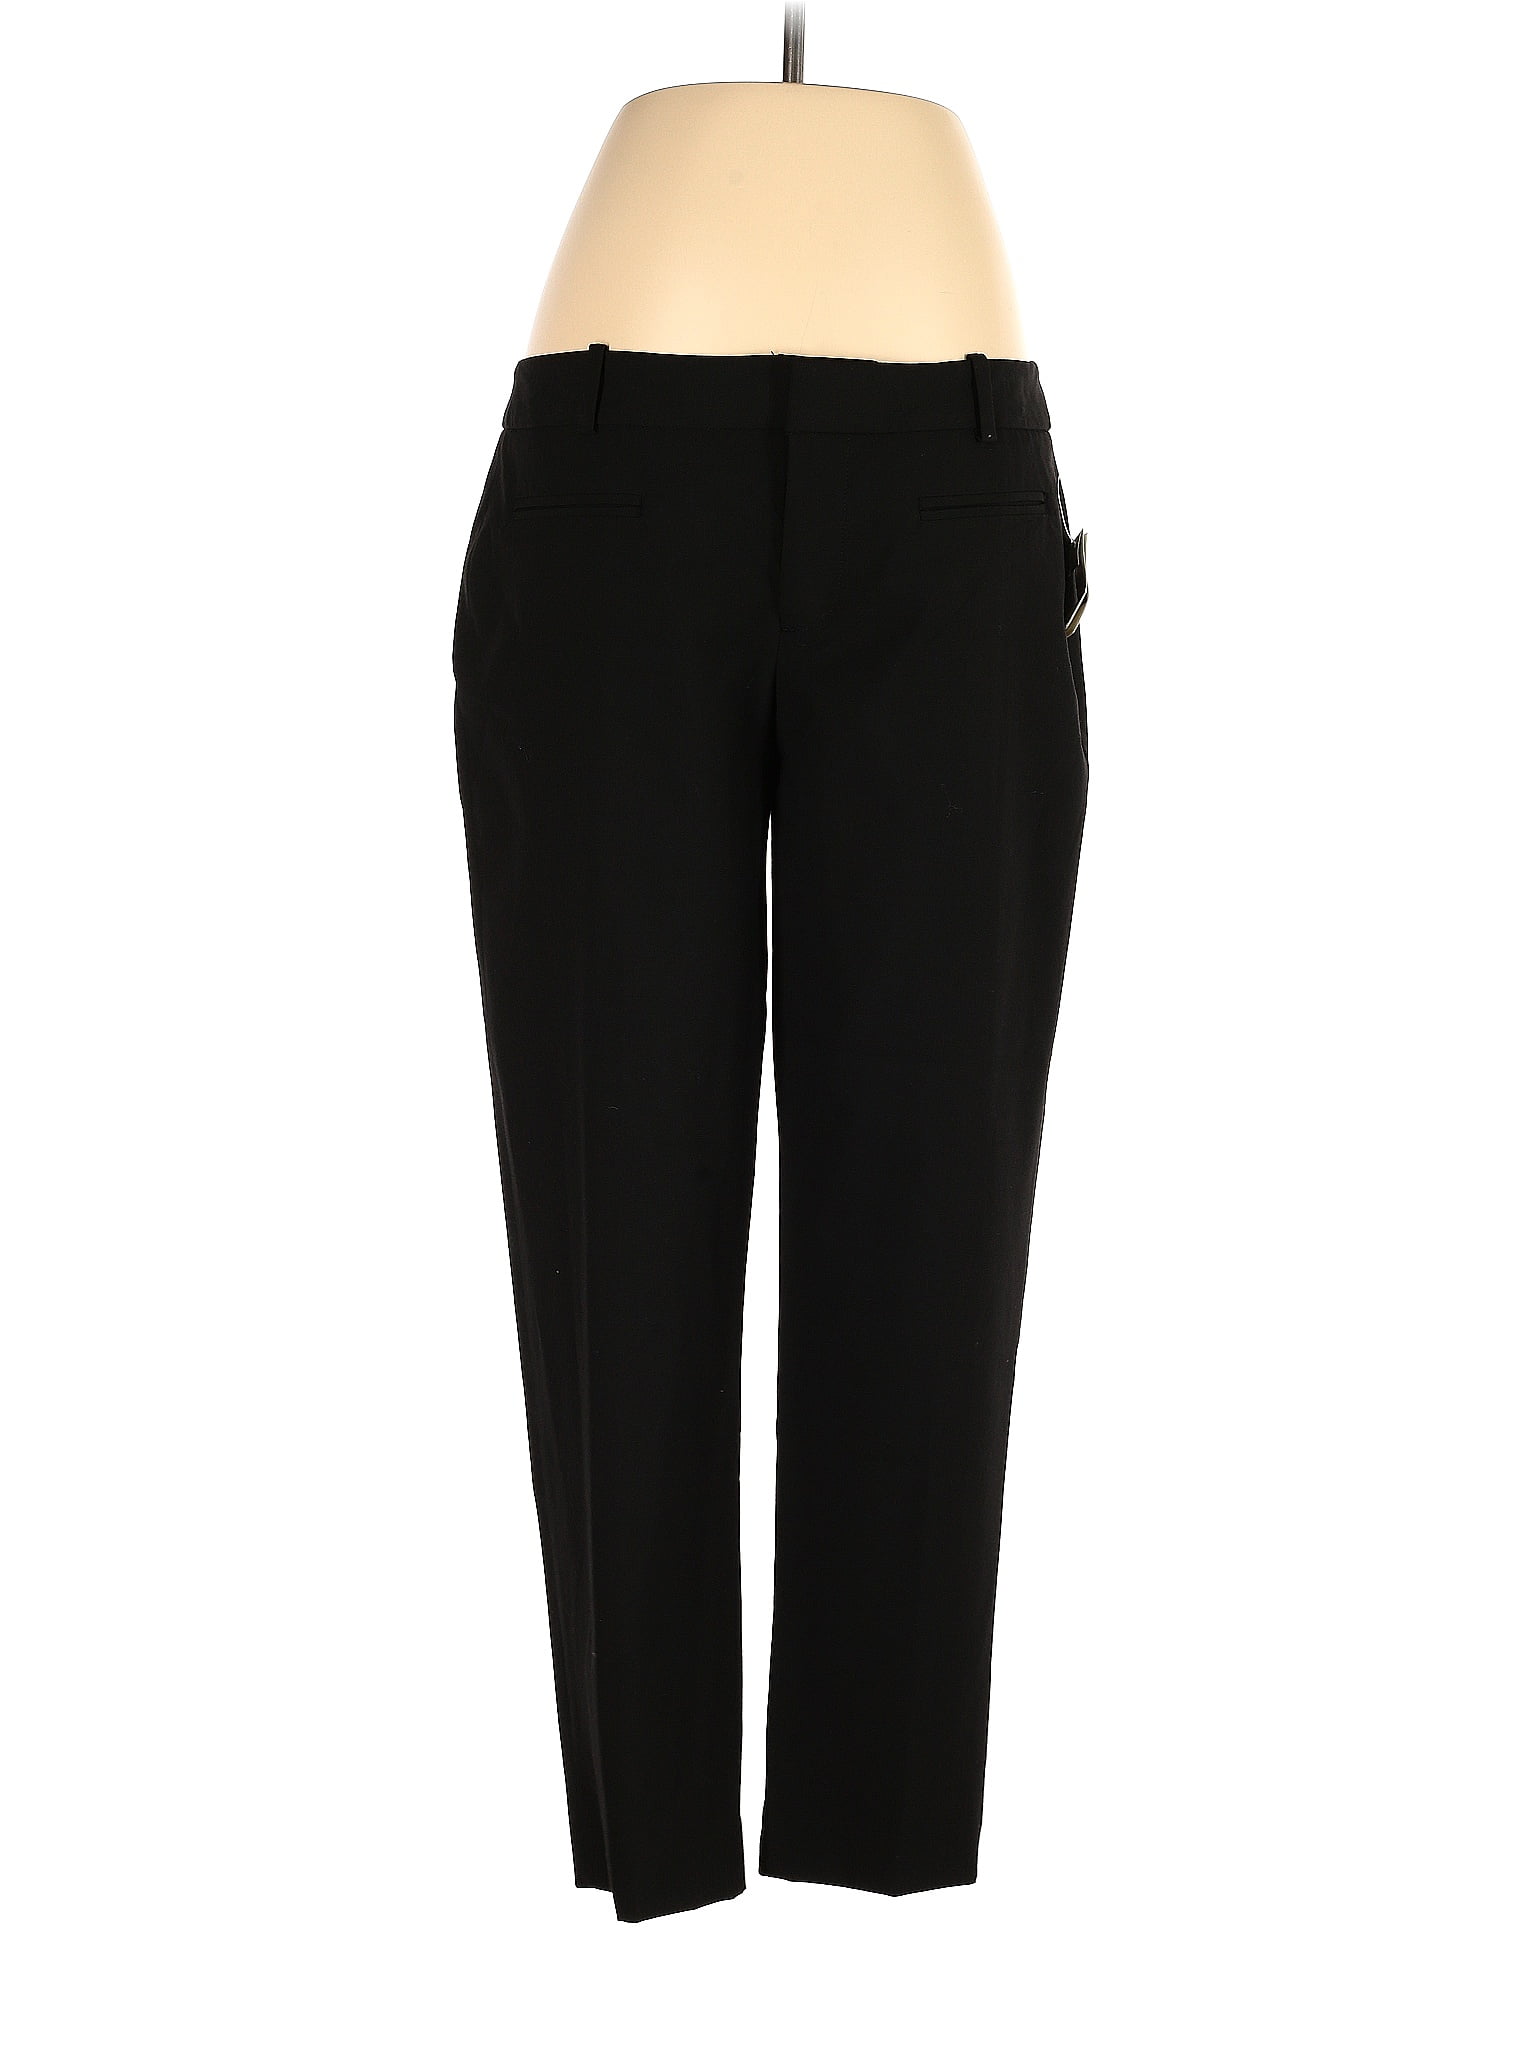 Gap Black Casual Pants Size 8 - 78% off | thredUP